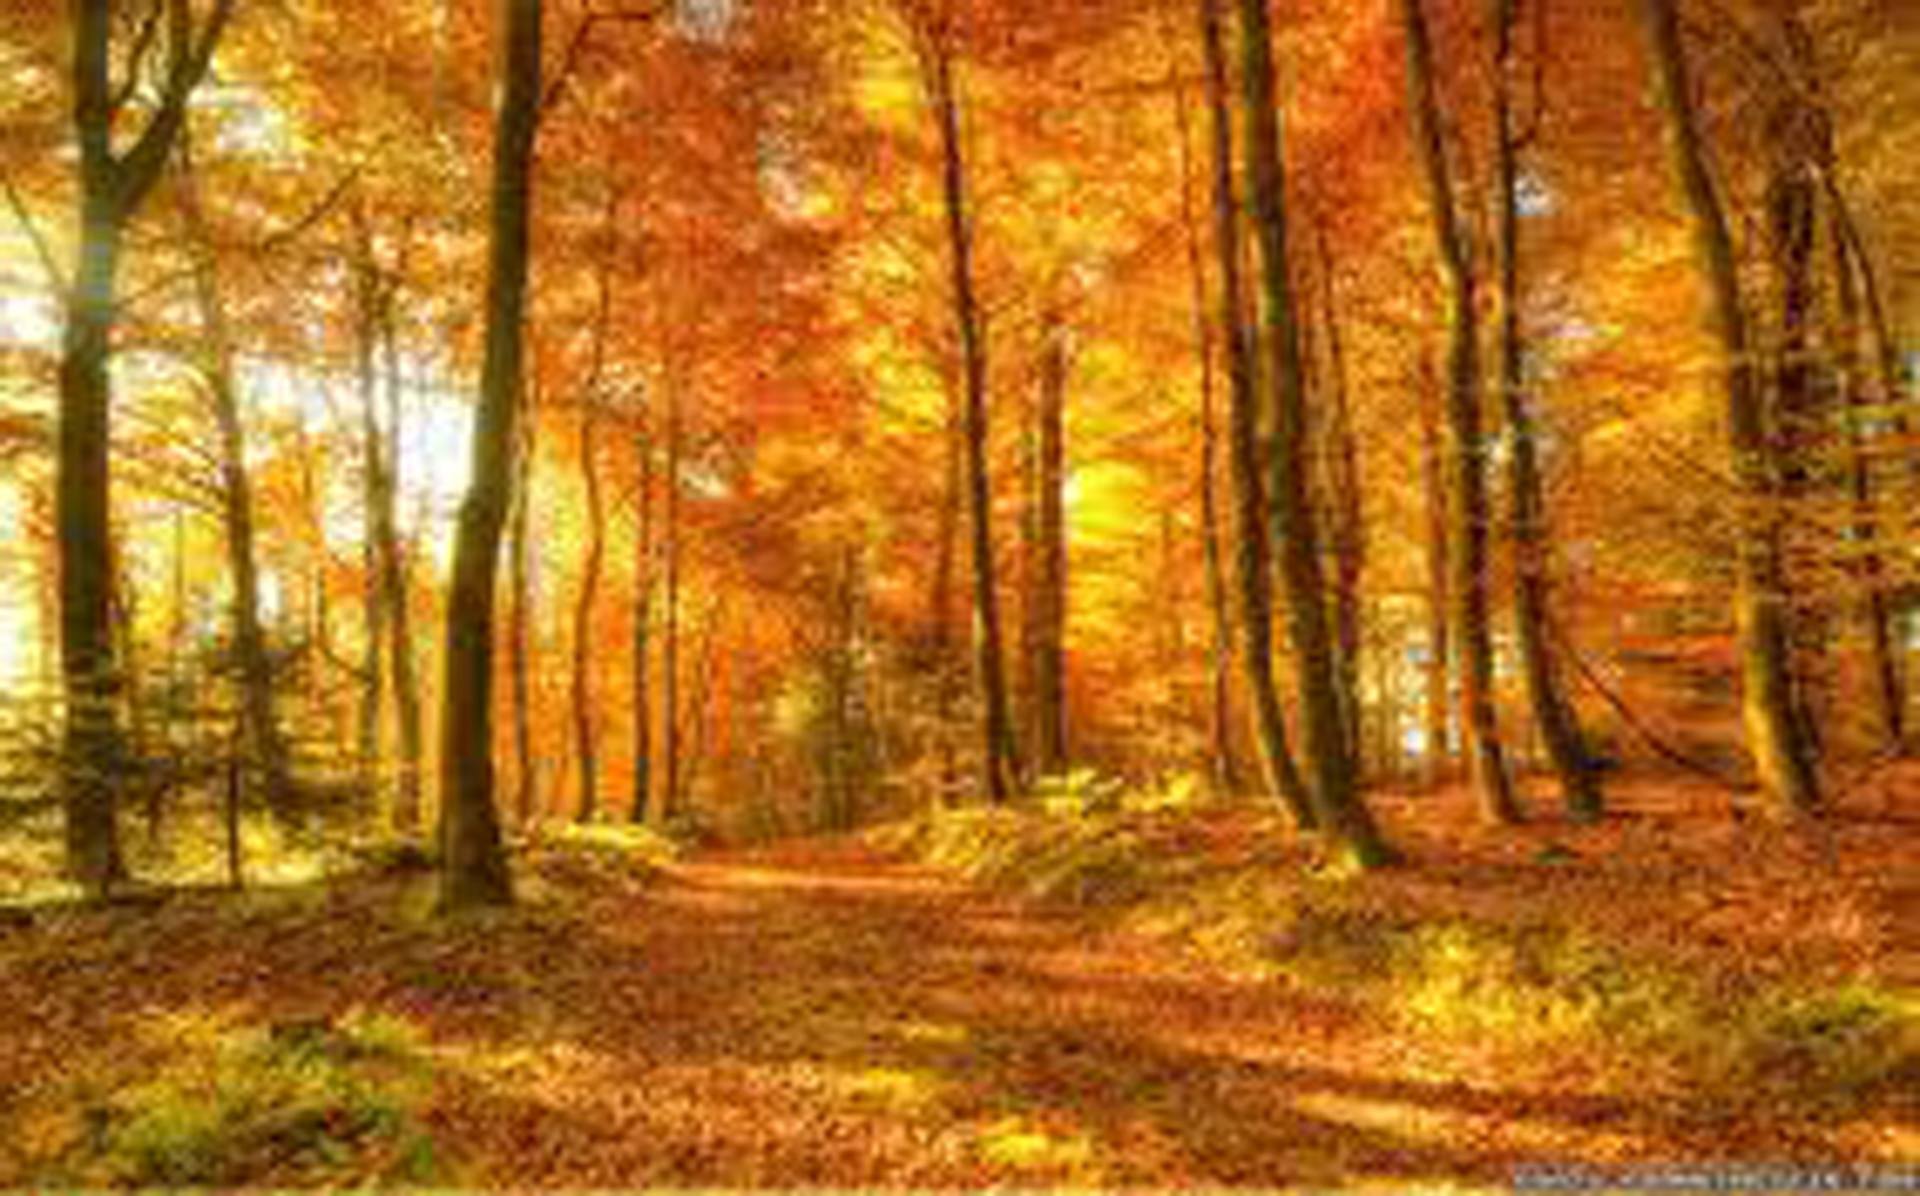 Saatchi Art: Autumn woods Painting by Jessica Delacroix